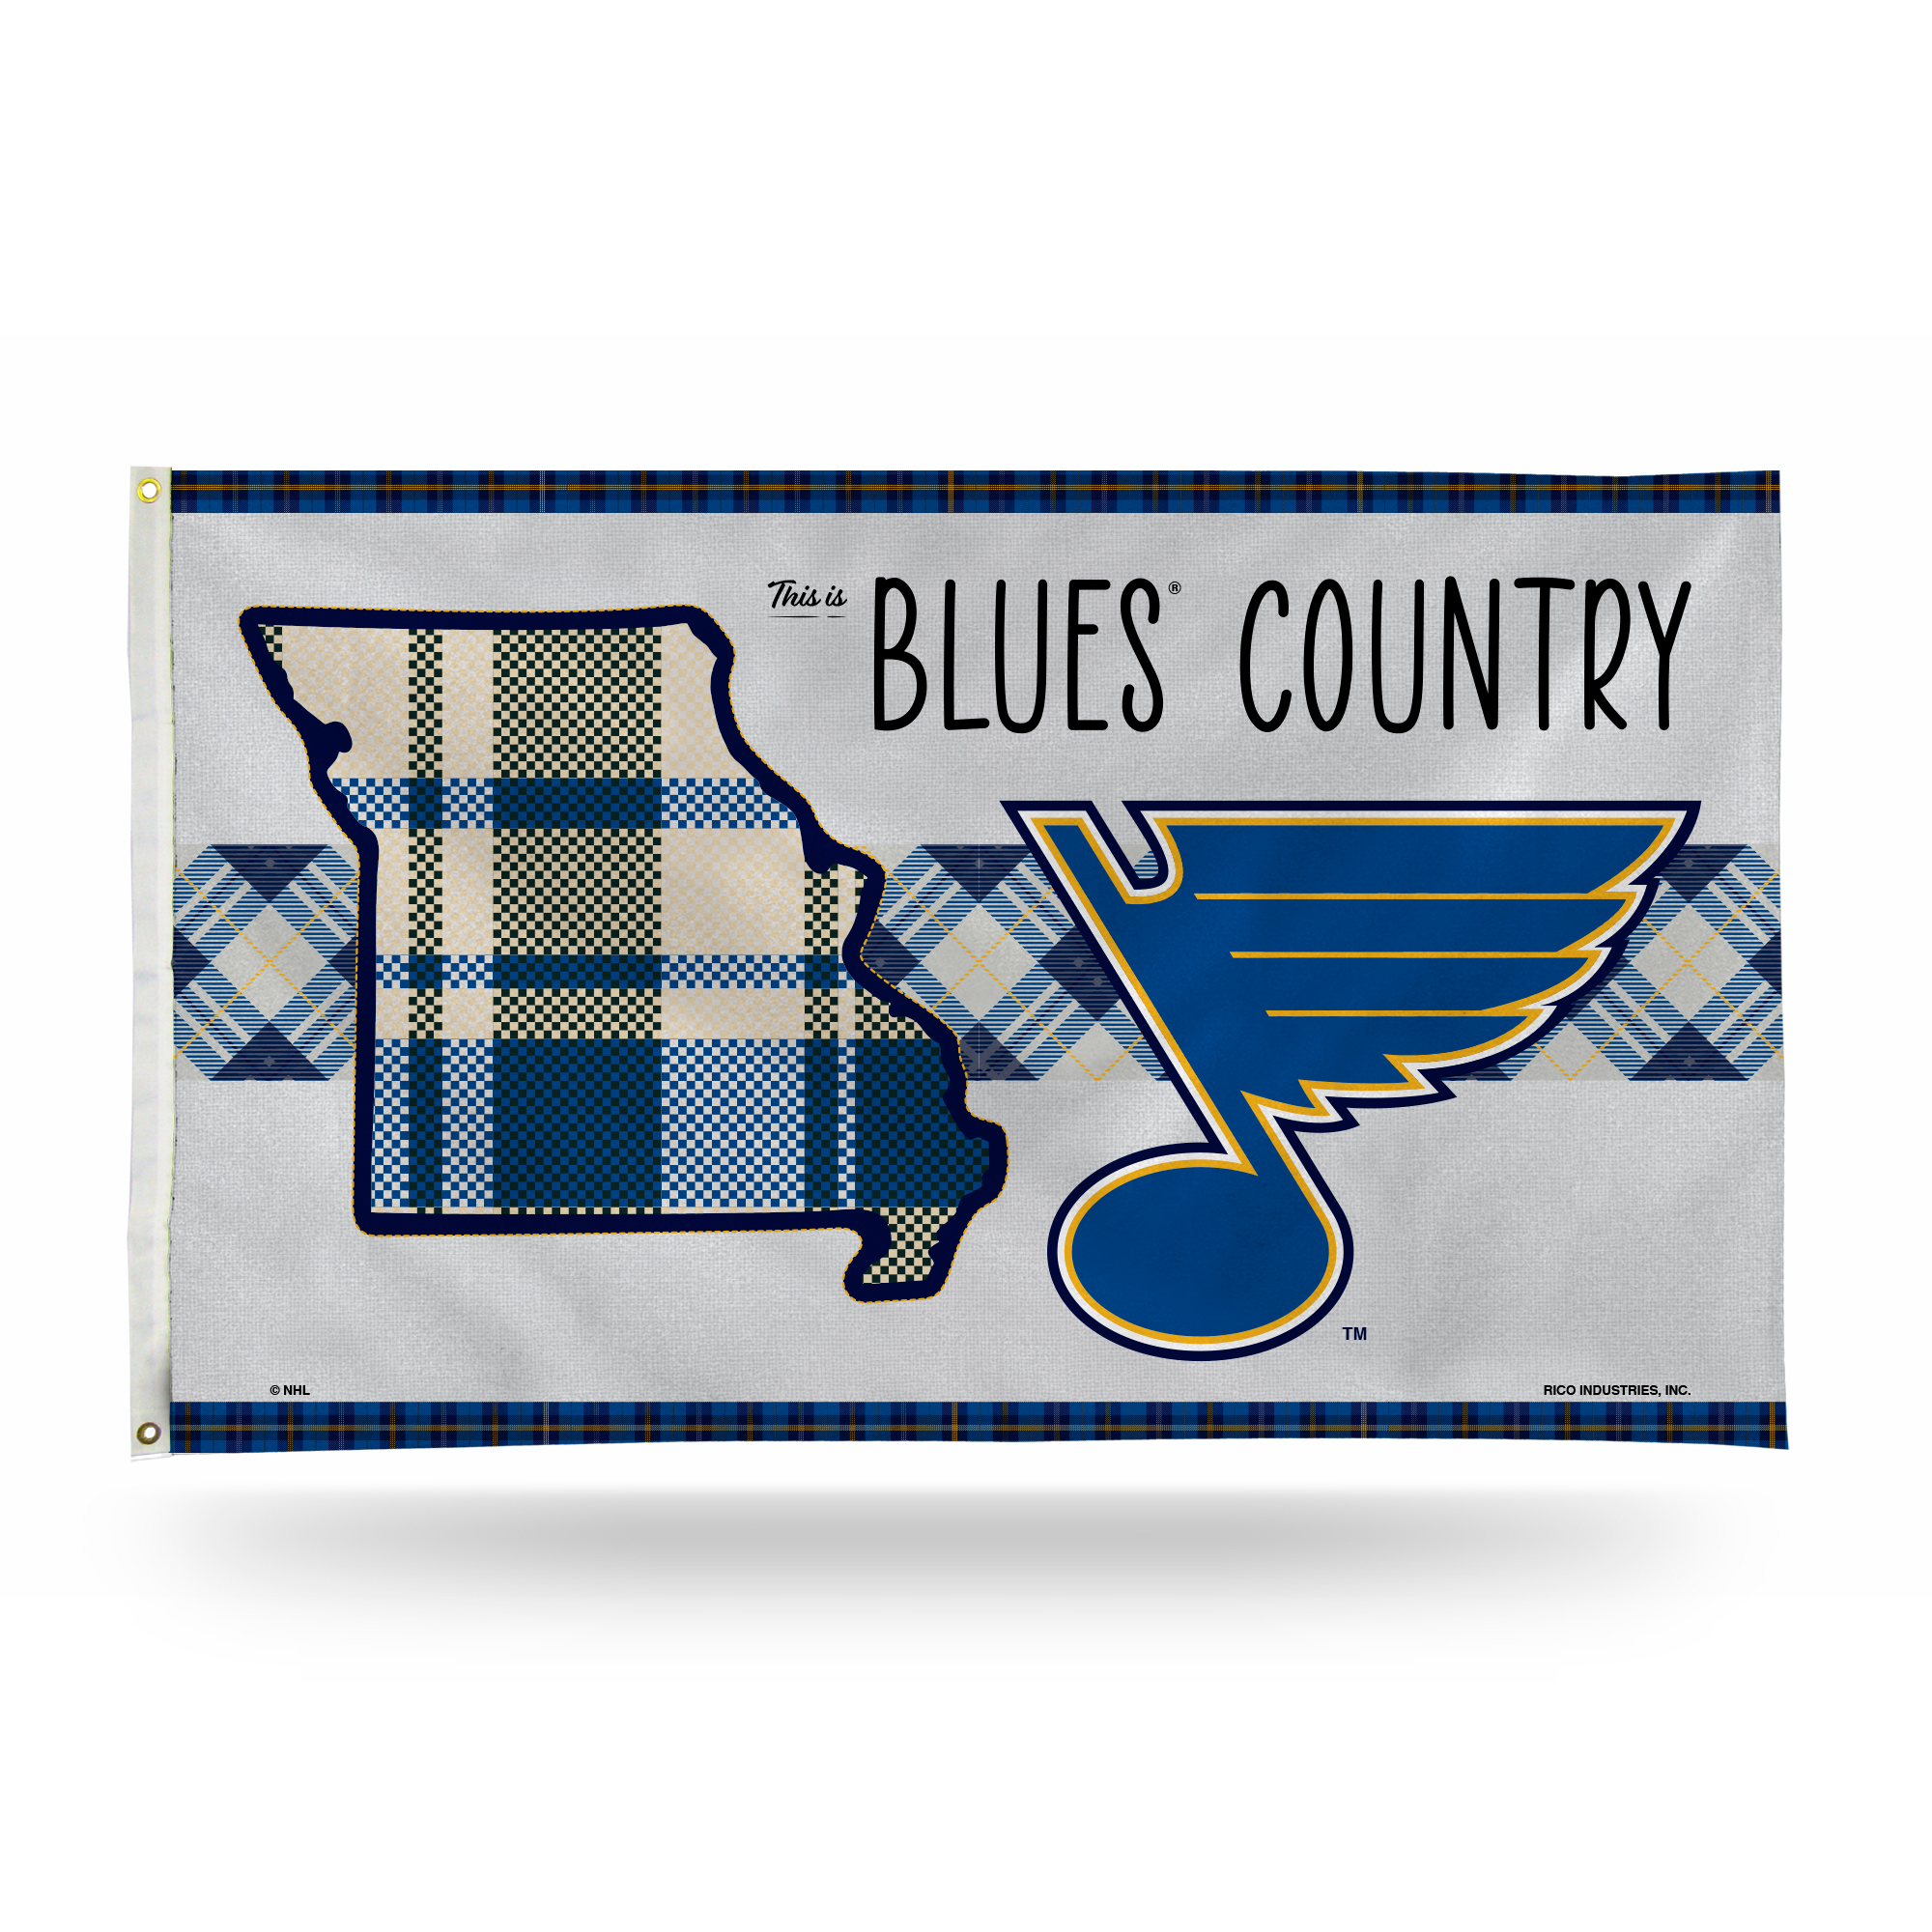 Rico NHL Rico Industries St. Louis Blues This is Blues Country - Plaid Design 3' x 5' Banner Flag